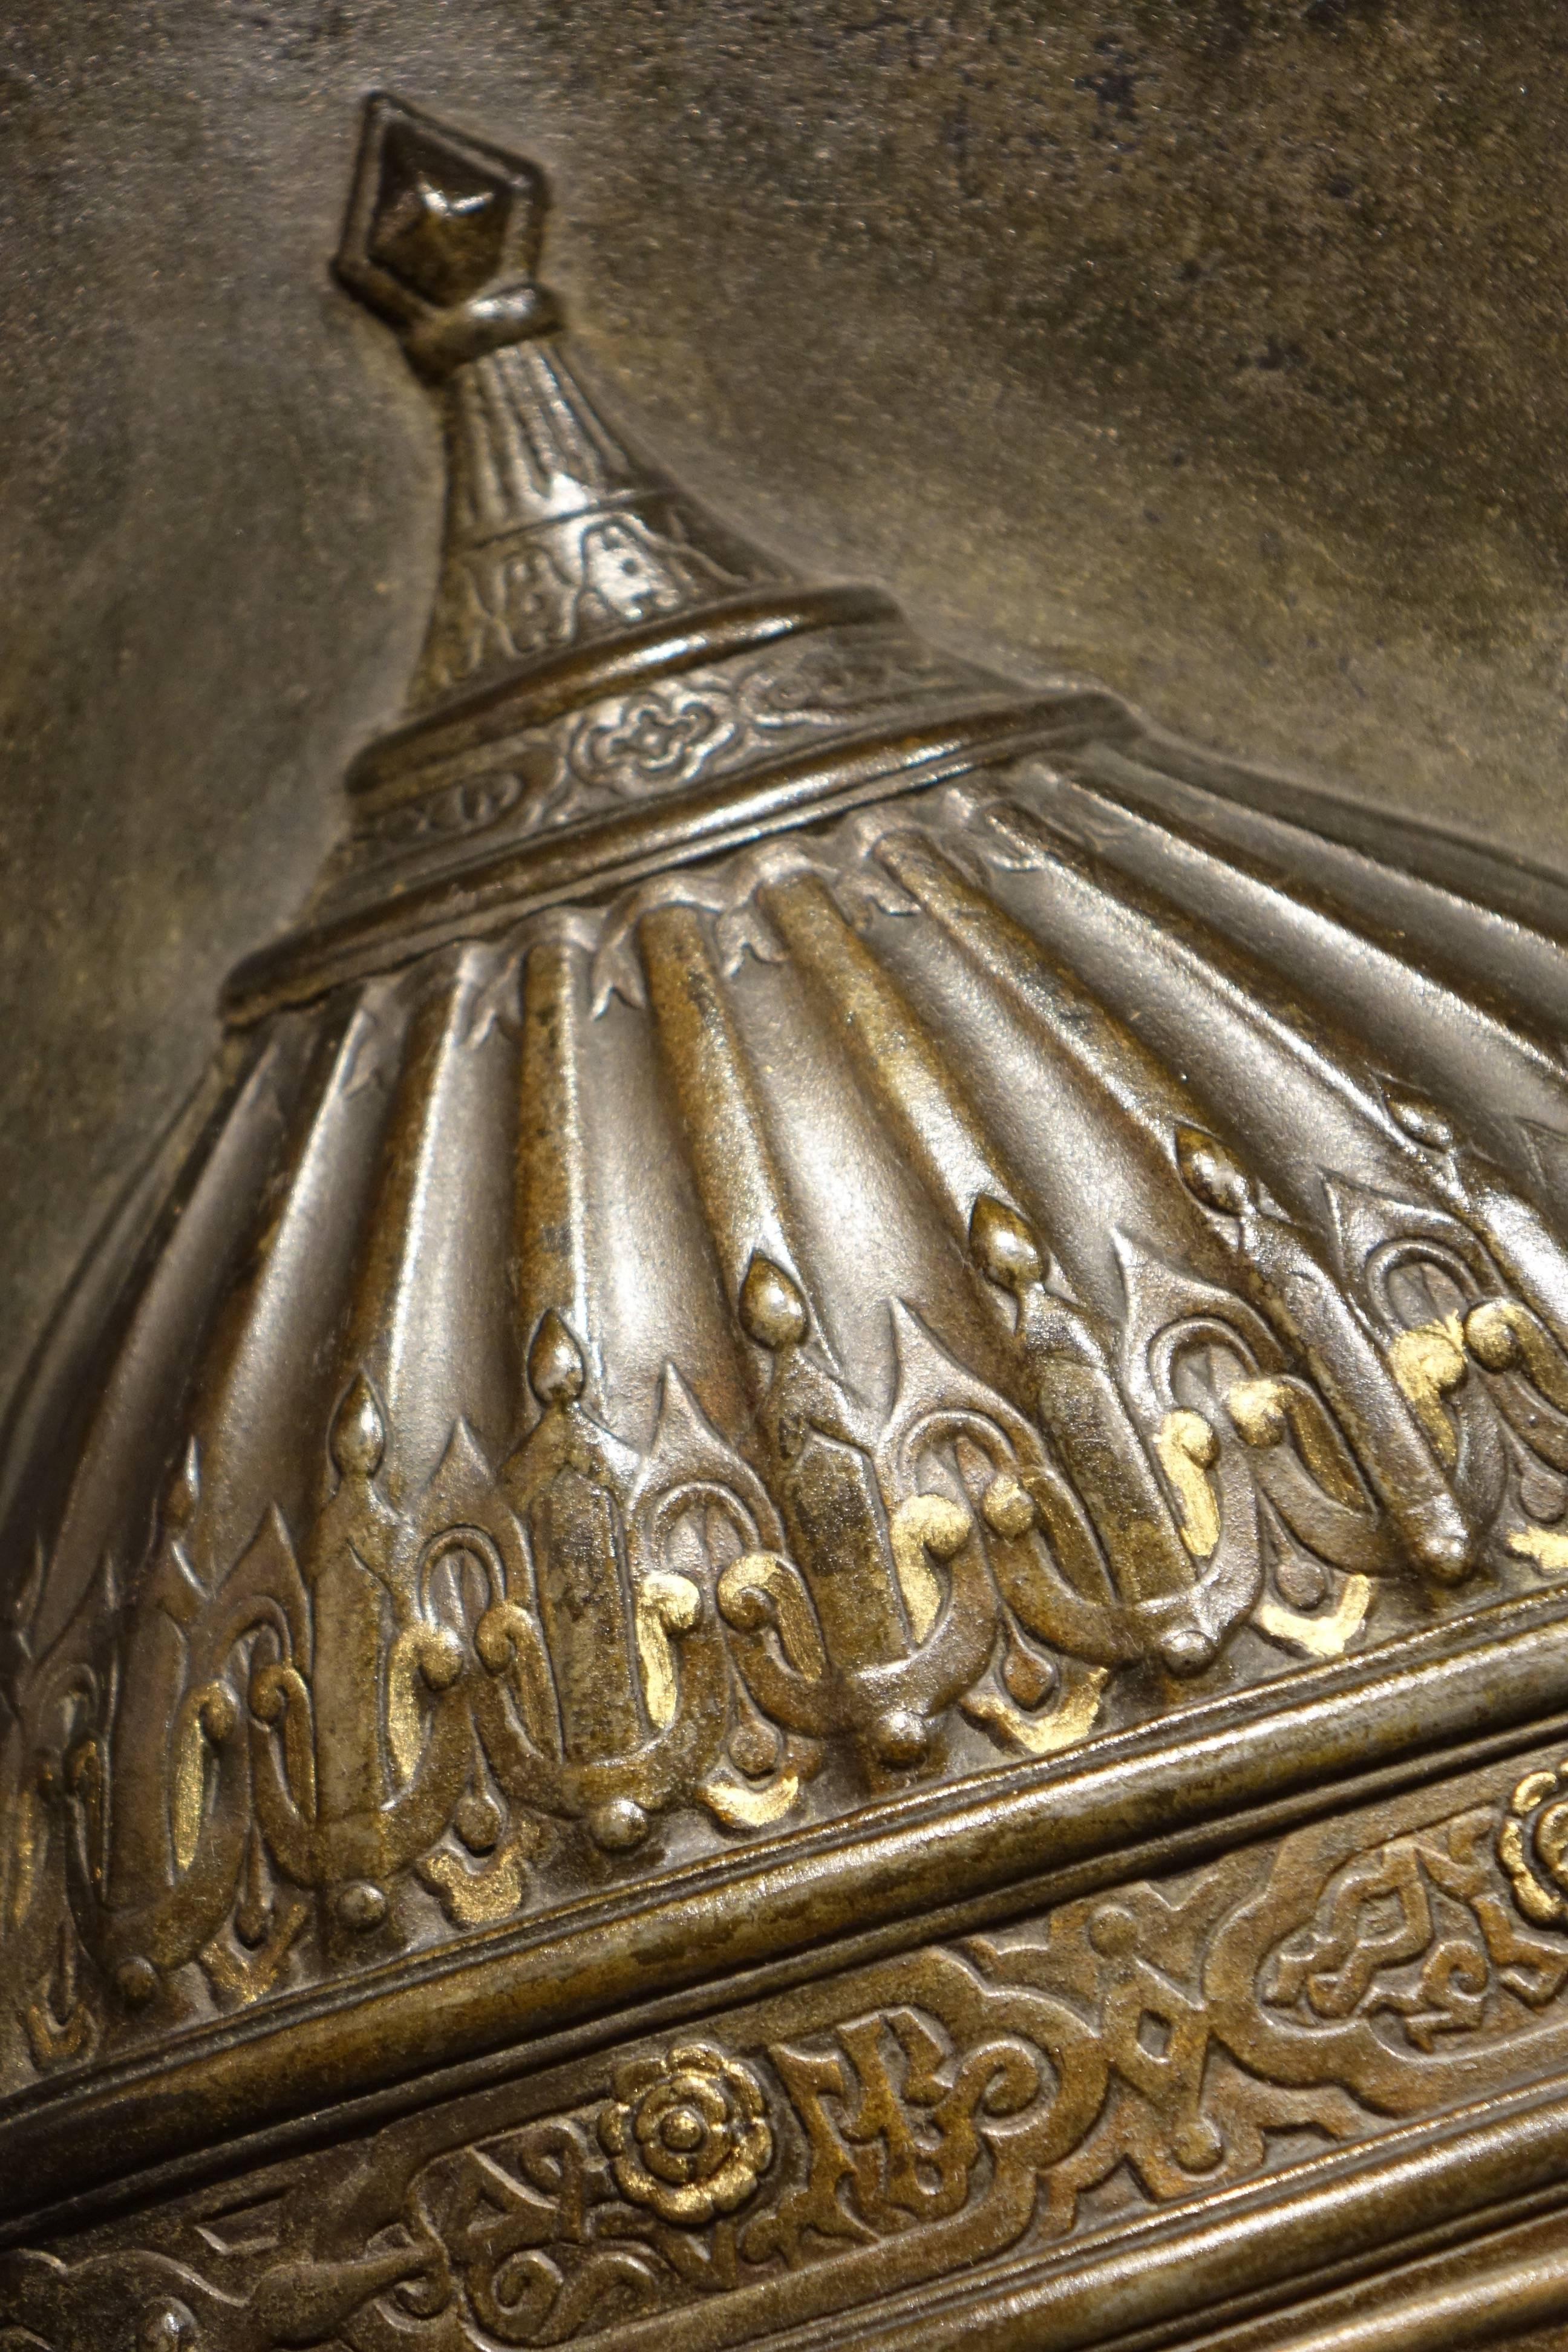 Renaissance Revival Metal Plate Representing a Qadjar Warrior Signed D. Lenoir, France 19th Century